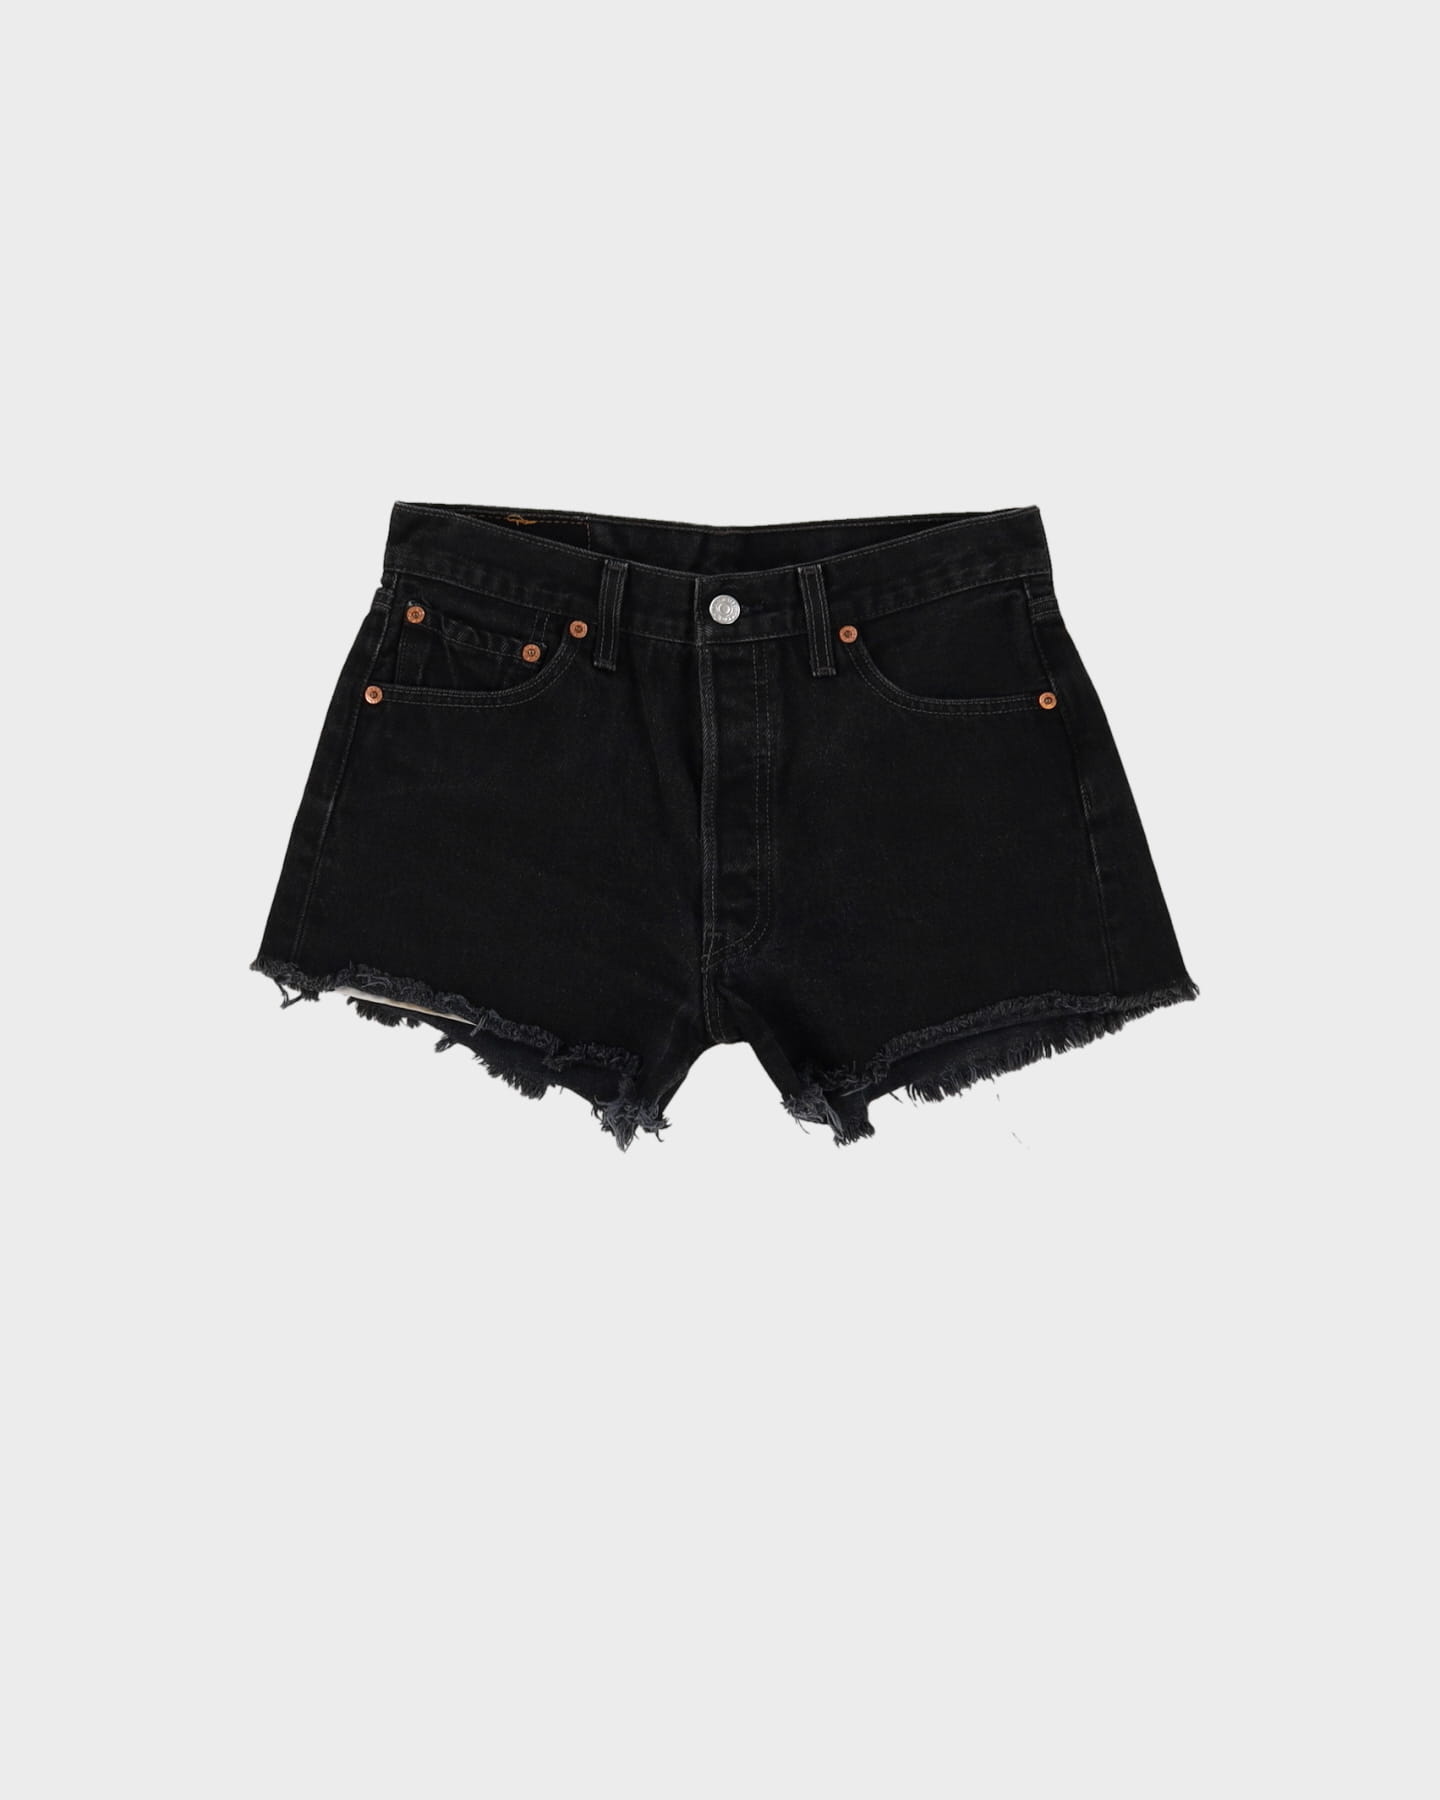 Vintage Levi's Black Denim Shorts - W28